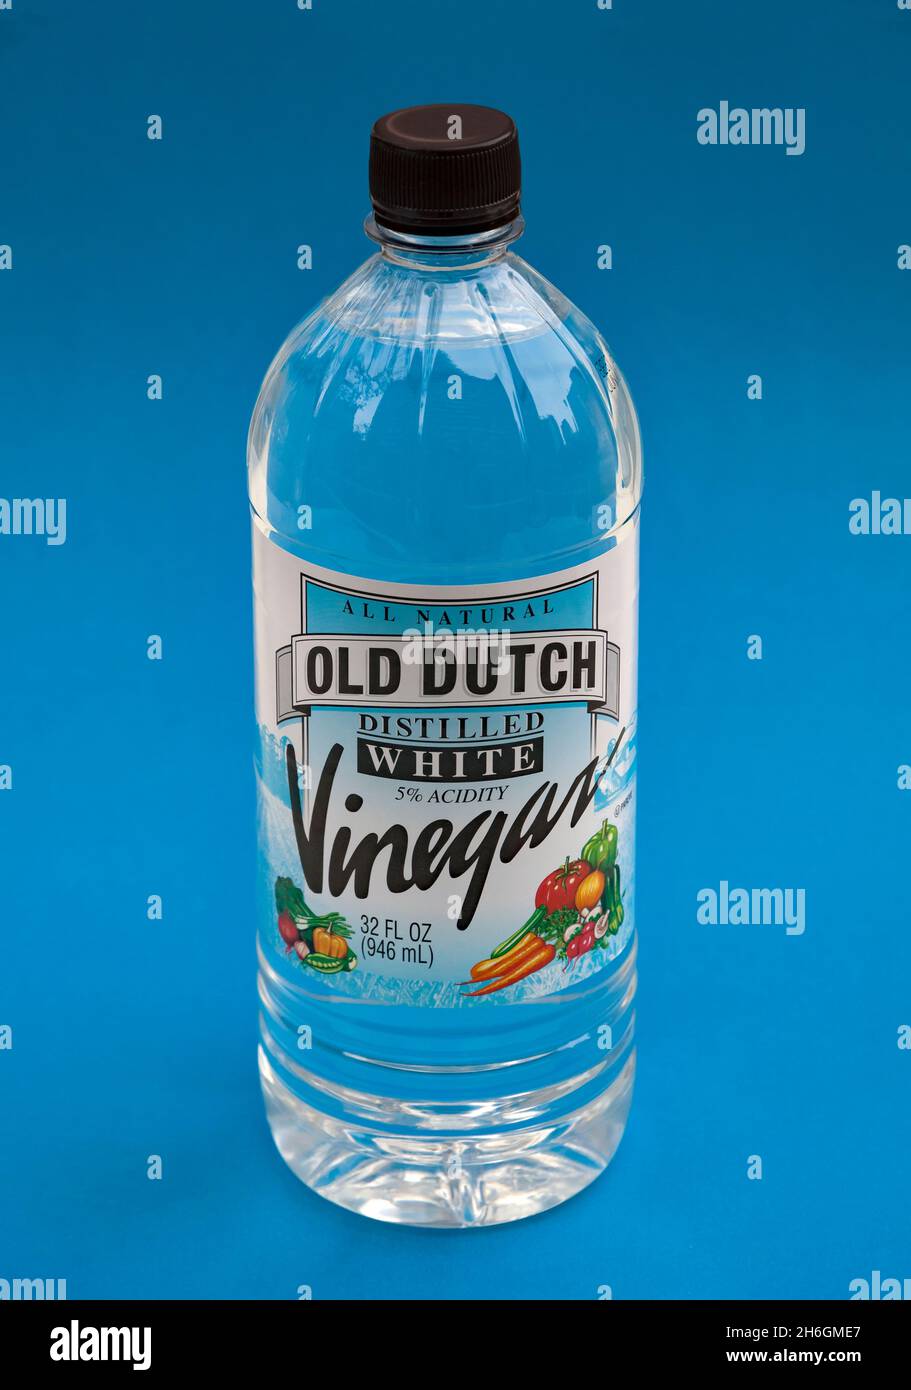 Bottle of Old Dutch Distilled White Vinegar. Stock Photo